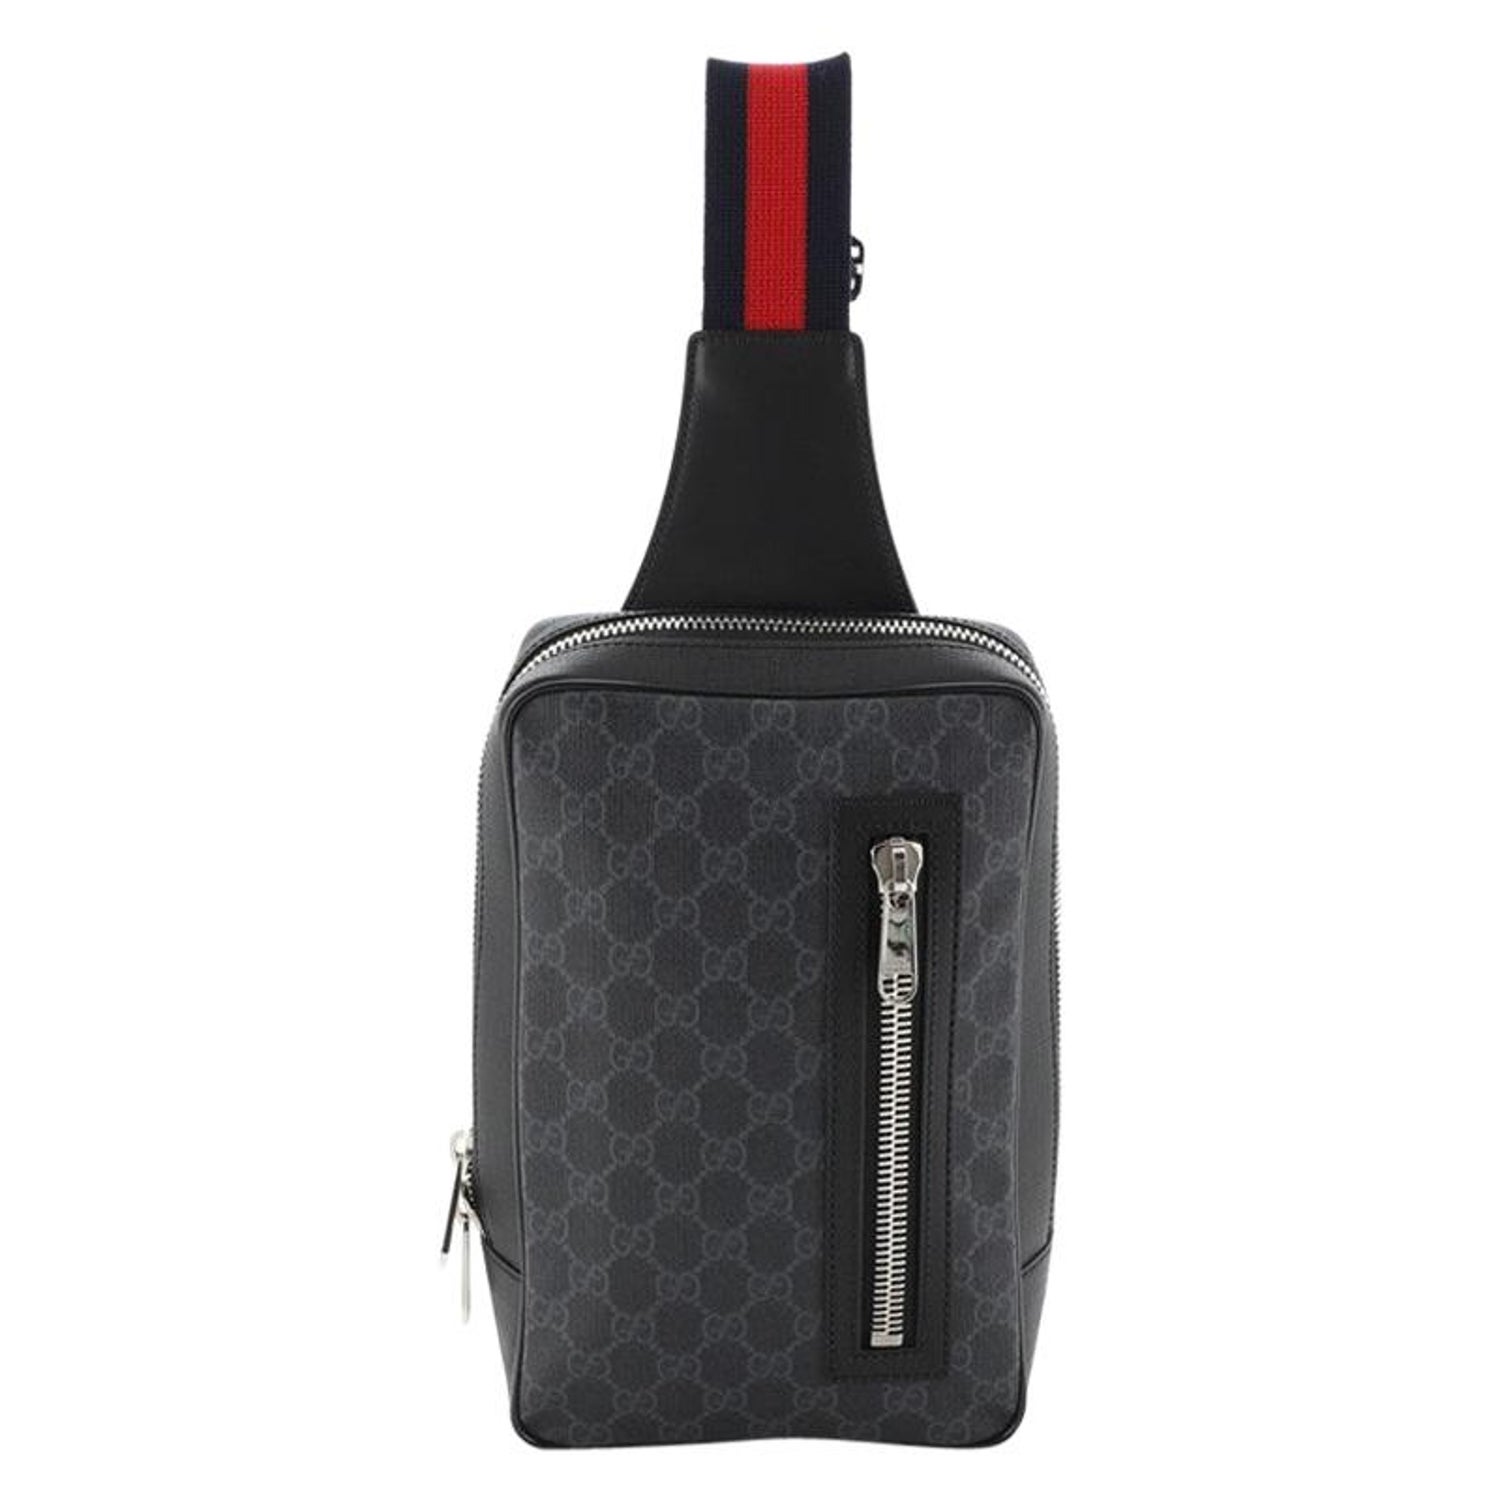 Gucci Gg Sling Bag - 2 For Sale on 1stDibs